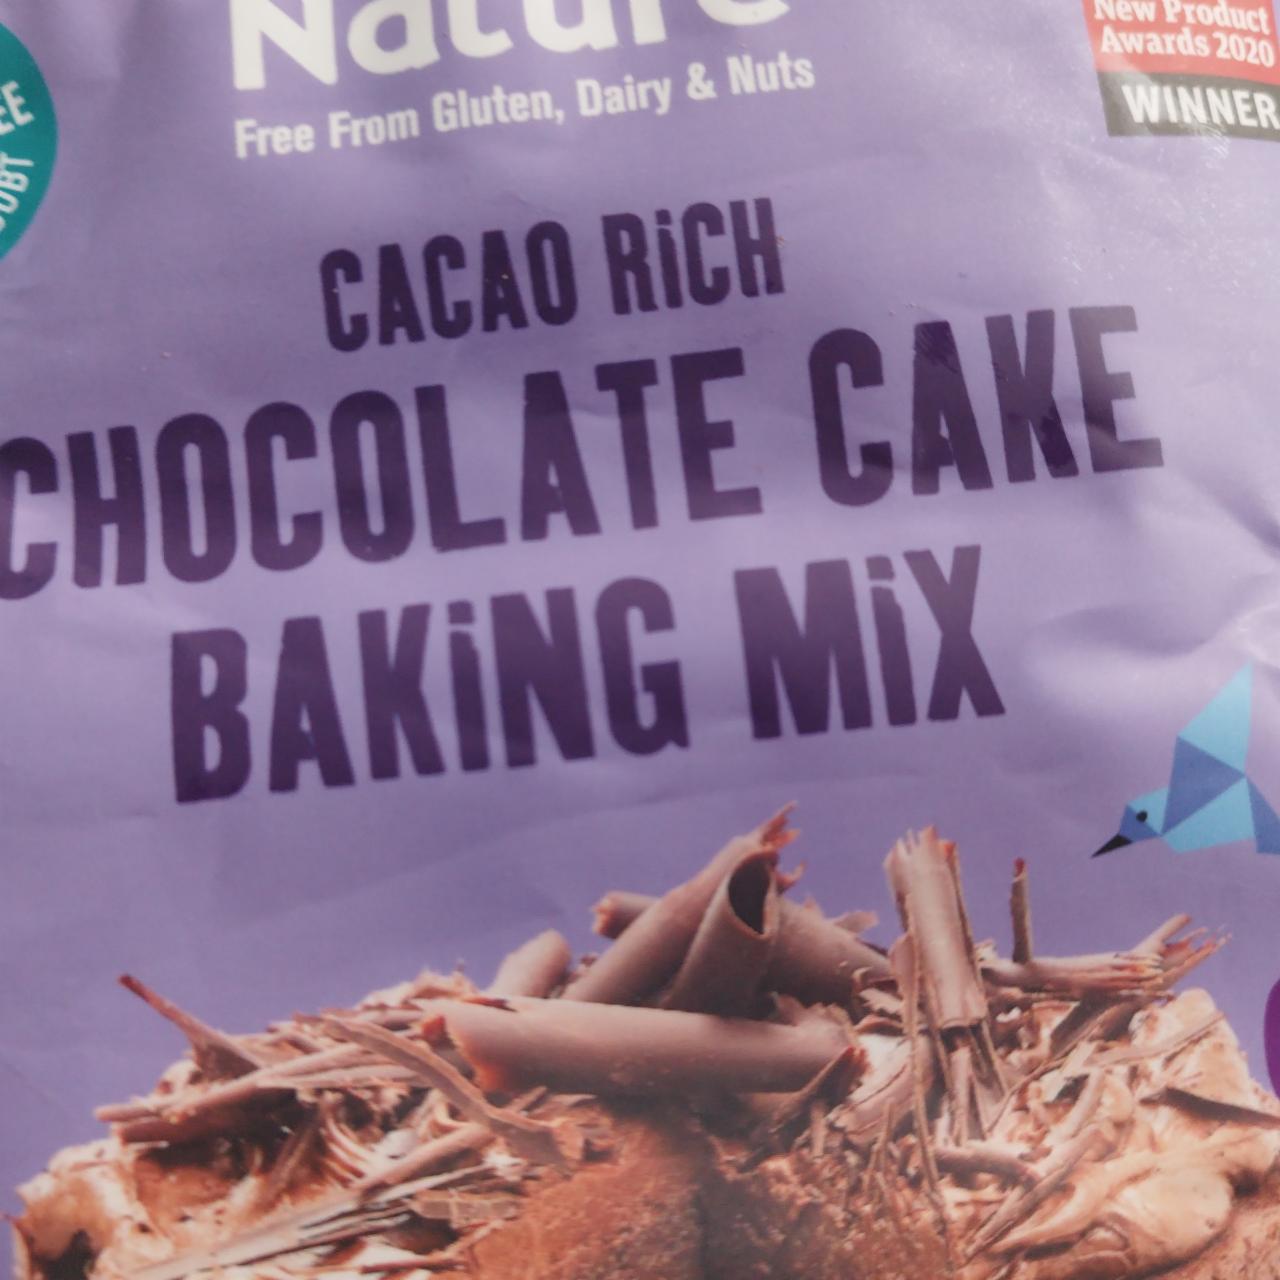 Fotografie - Cacao Rich Chocolate Cake Baking Mix Creative Nature